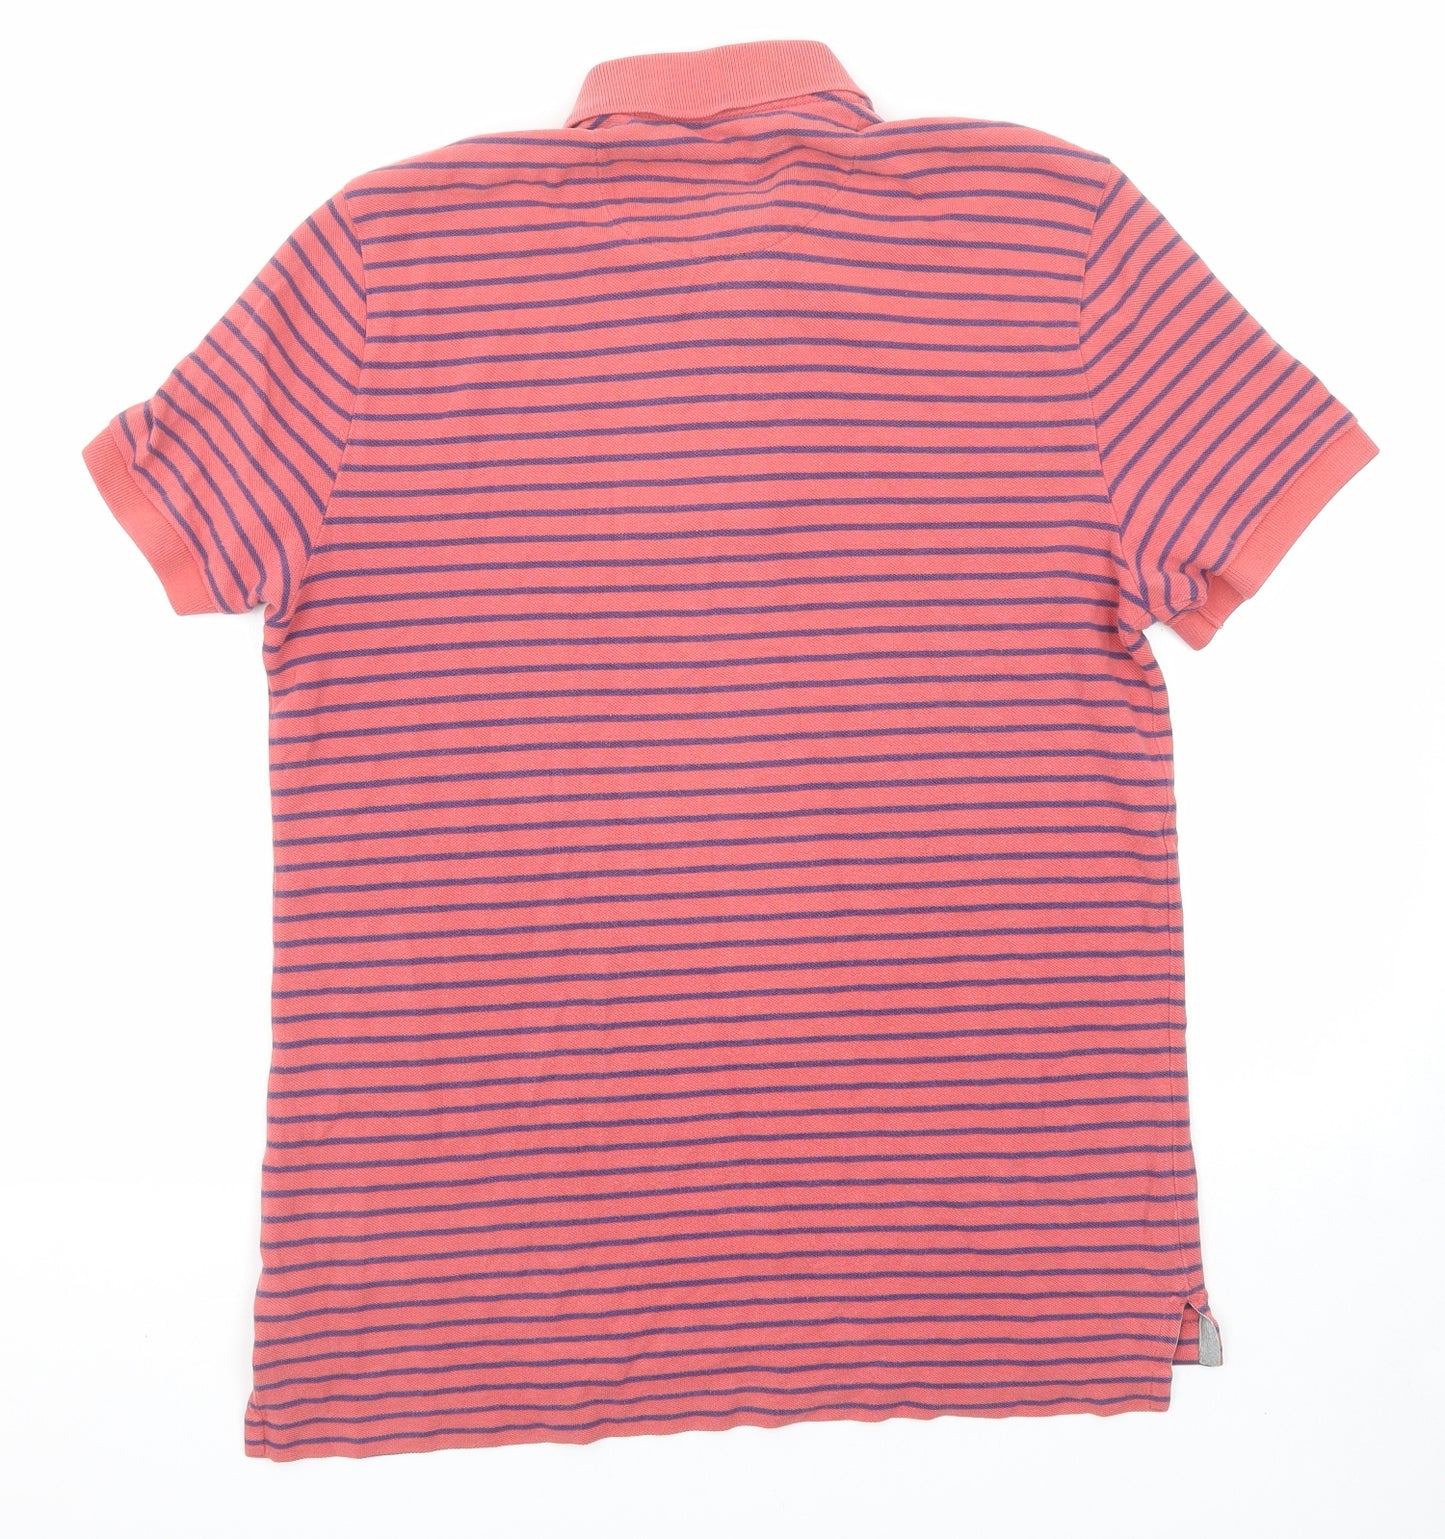 Gap Mens Red Striped Cotton Polo Size M Collared Button